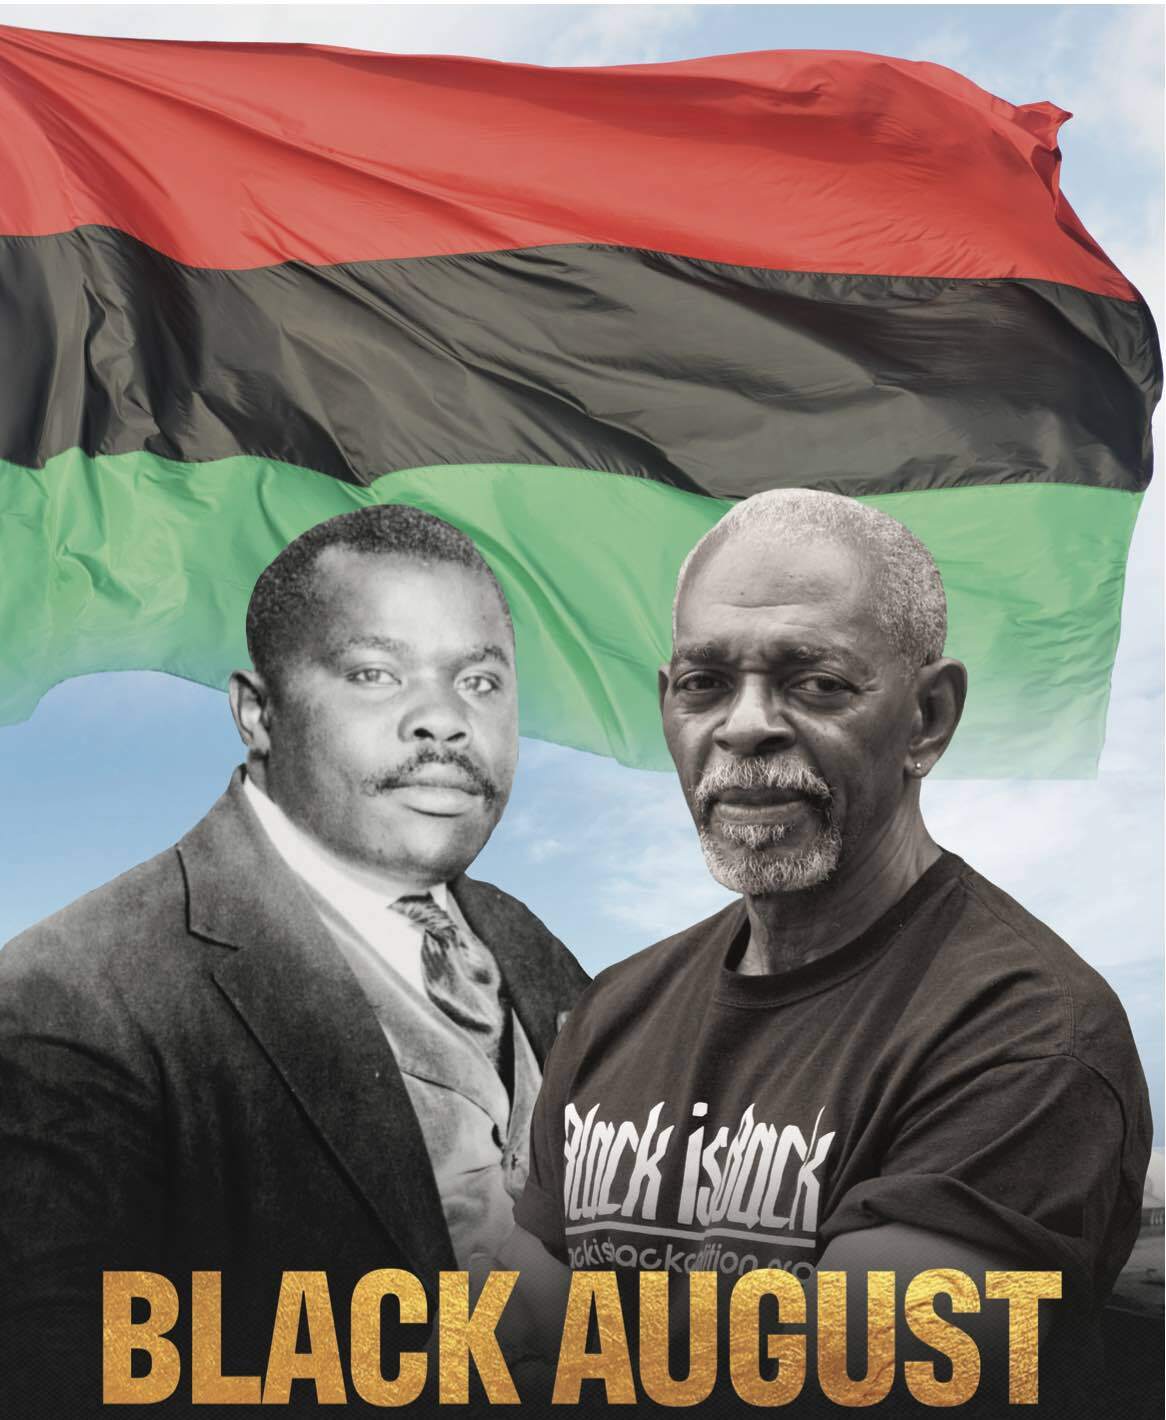 Black_August_Chairman_and_Garvey8k11m.jpg